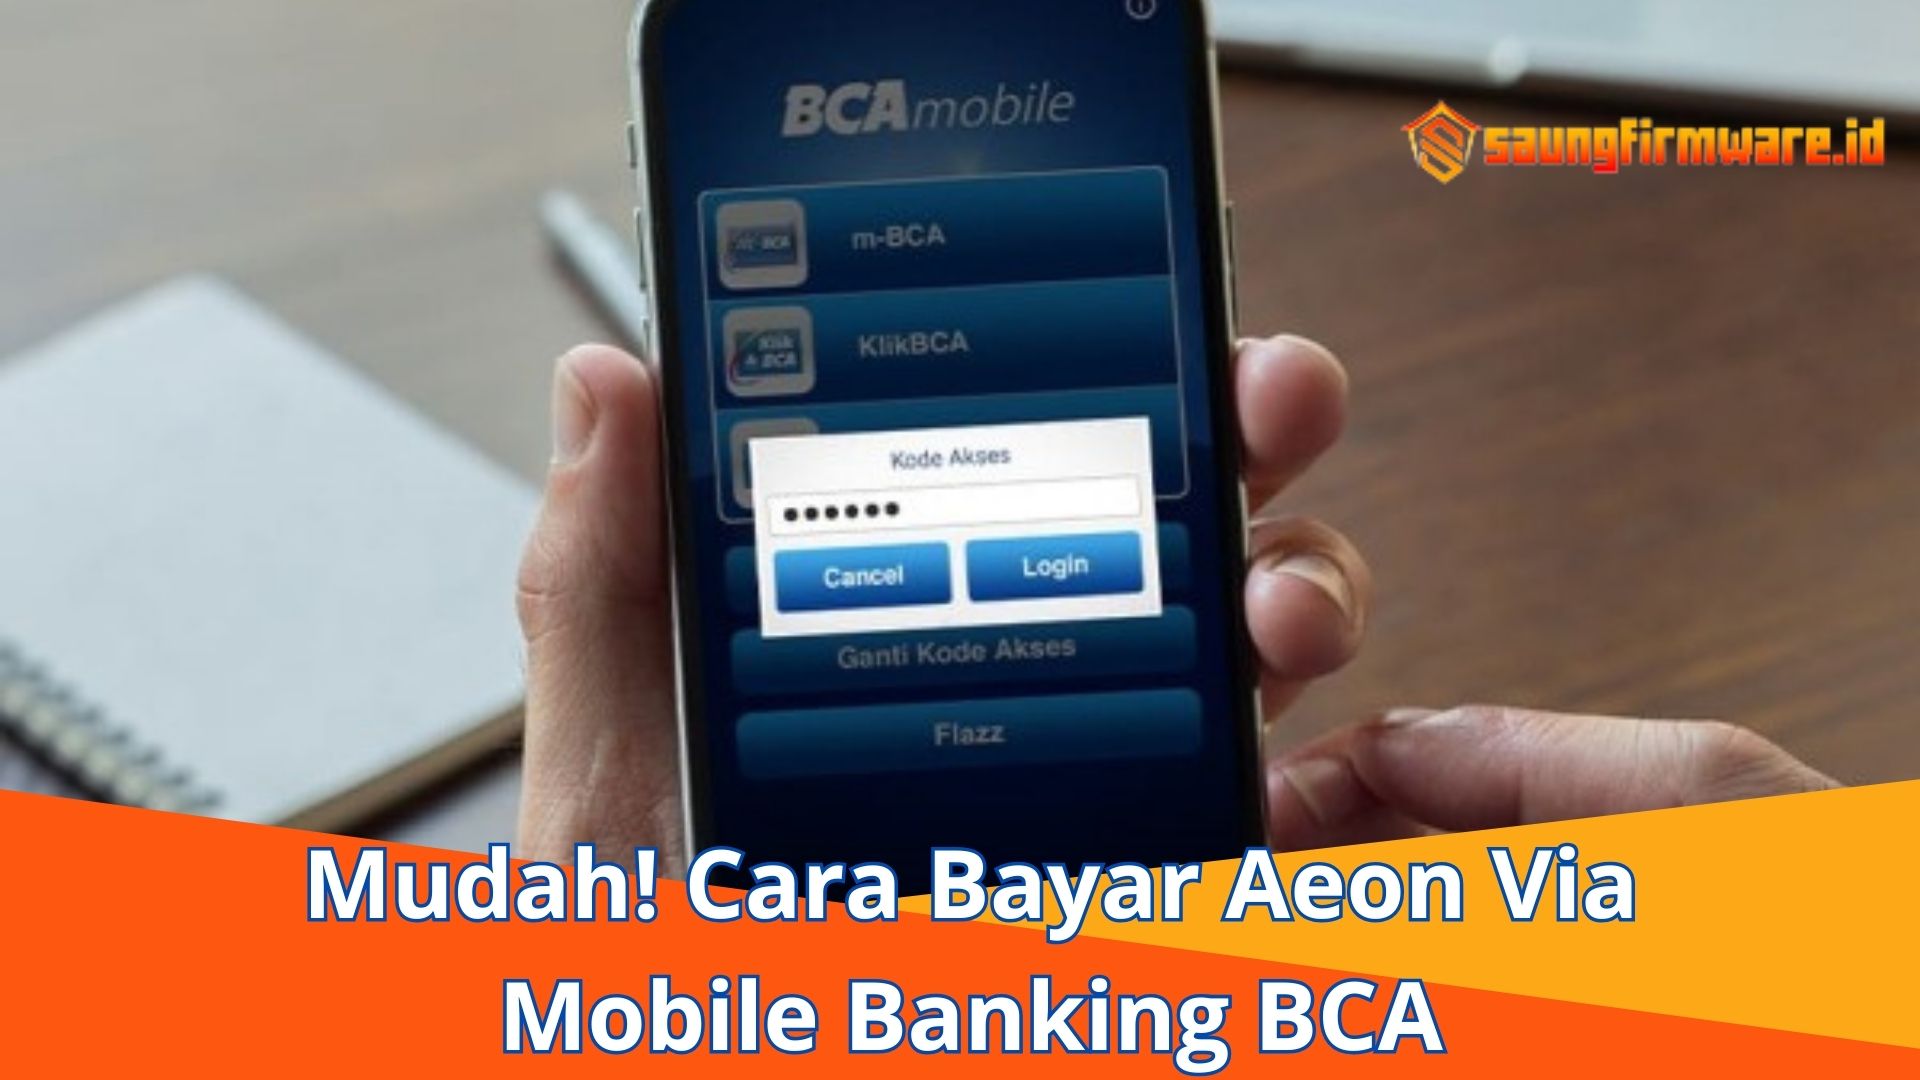 Mudah! Cara Bayar Aeon Via Mobile Banking BCA